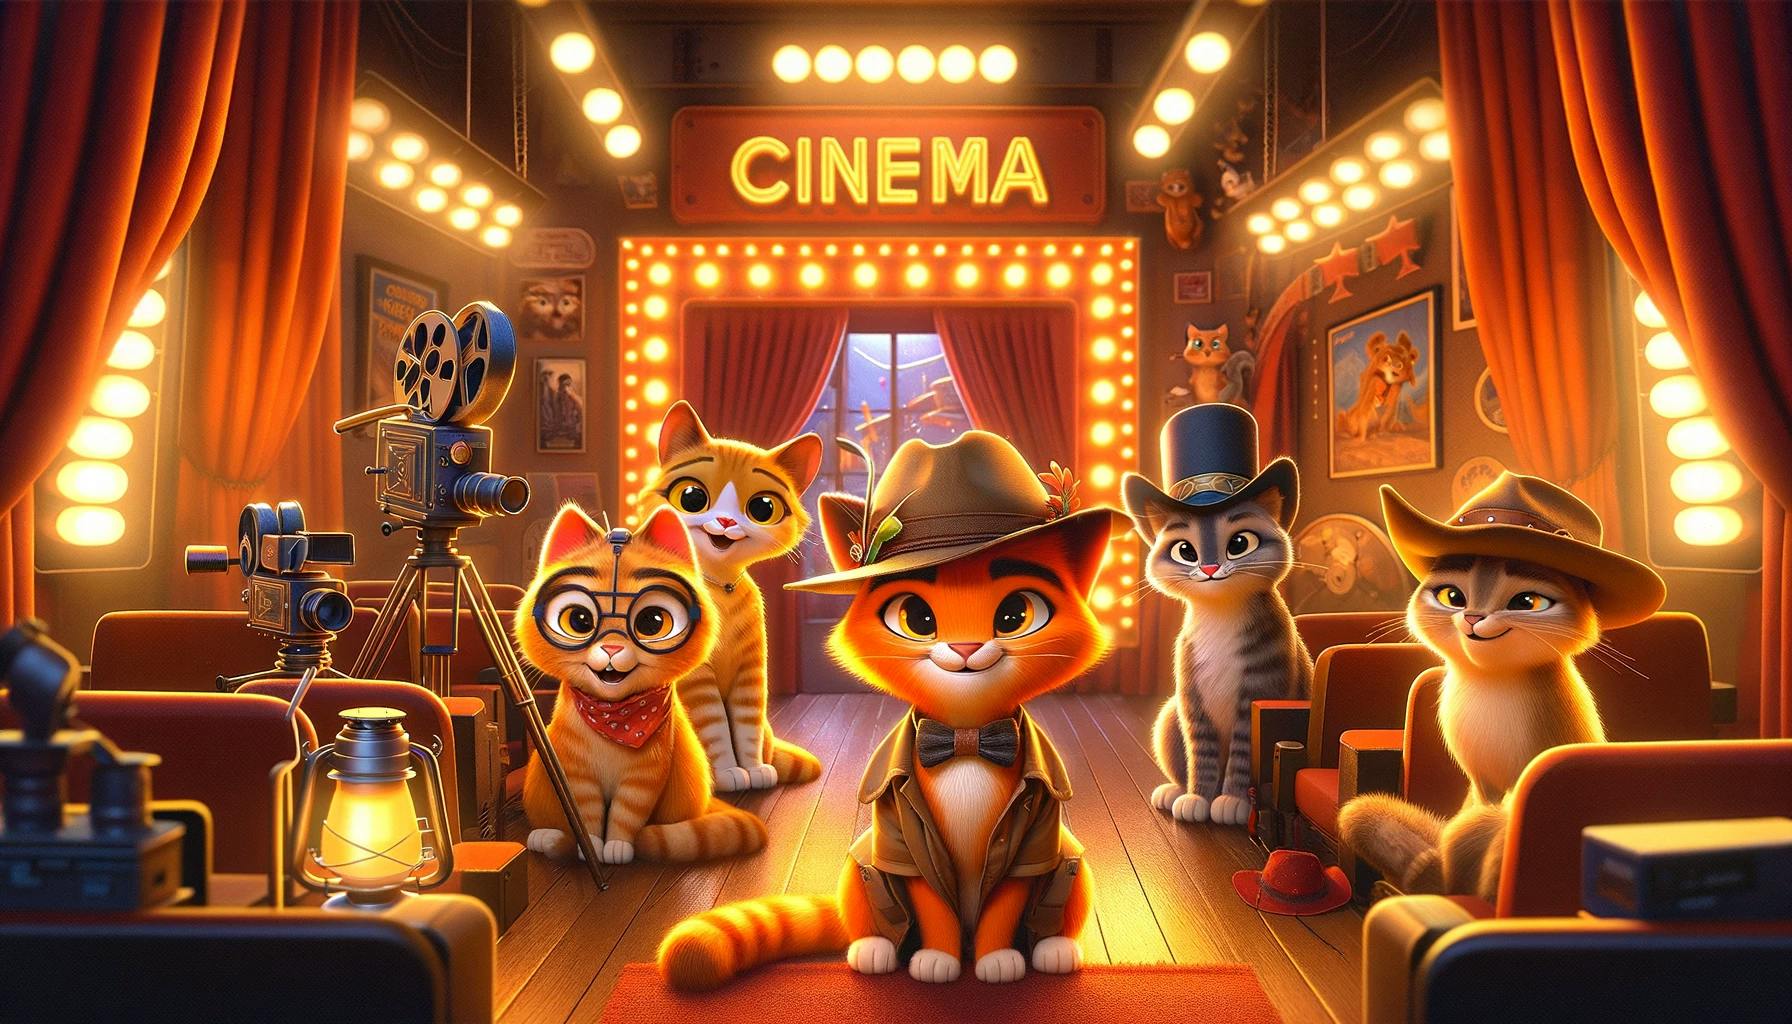 Random movie generator, movie genres represented as cats